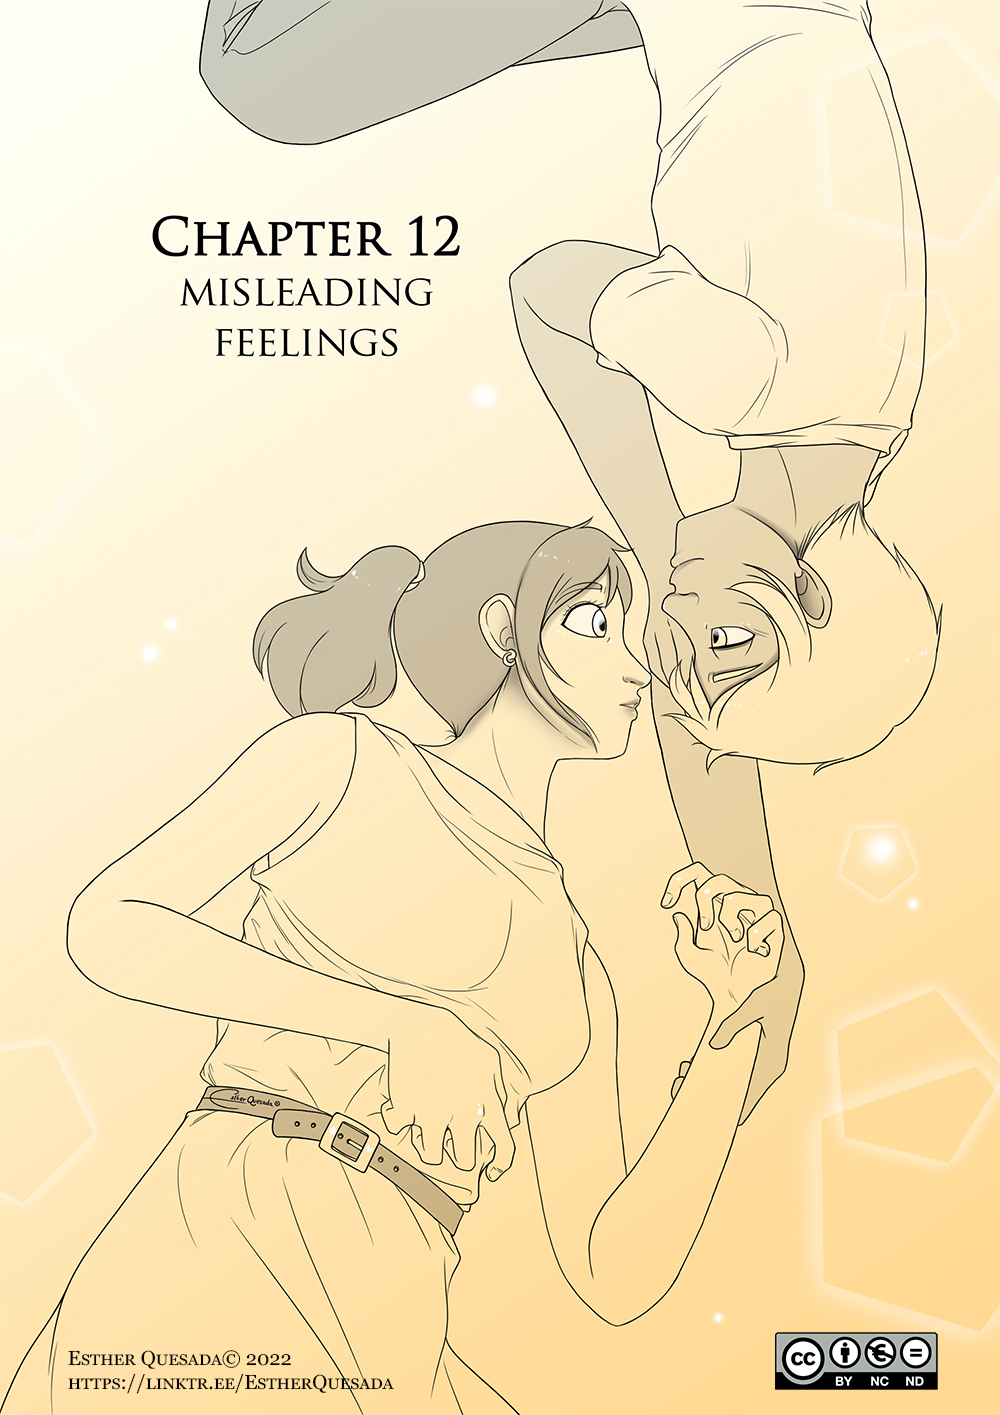 Chapter 12: Misleading feelings